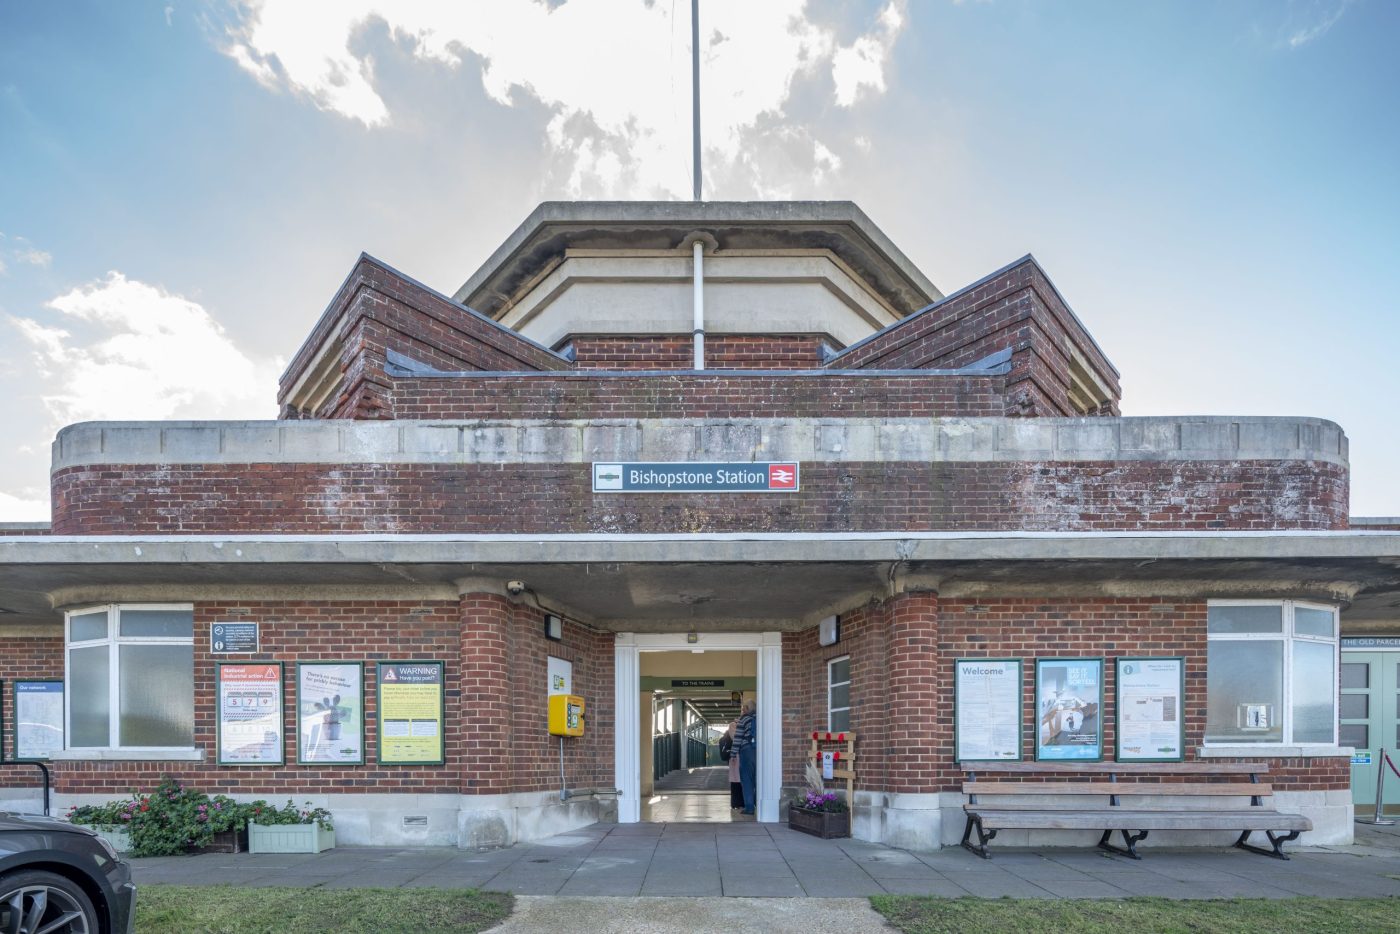 Exterior of Bishopstone railway station